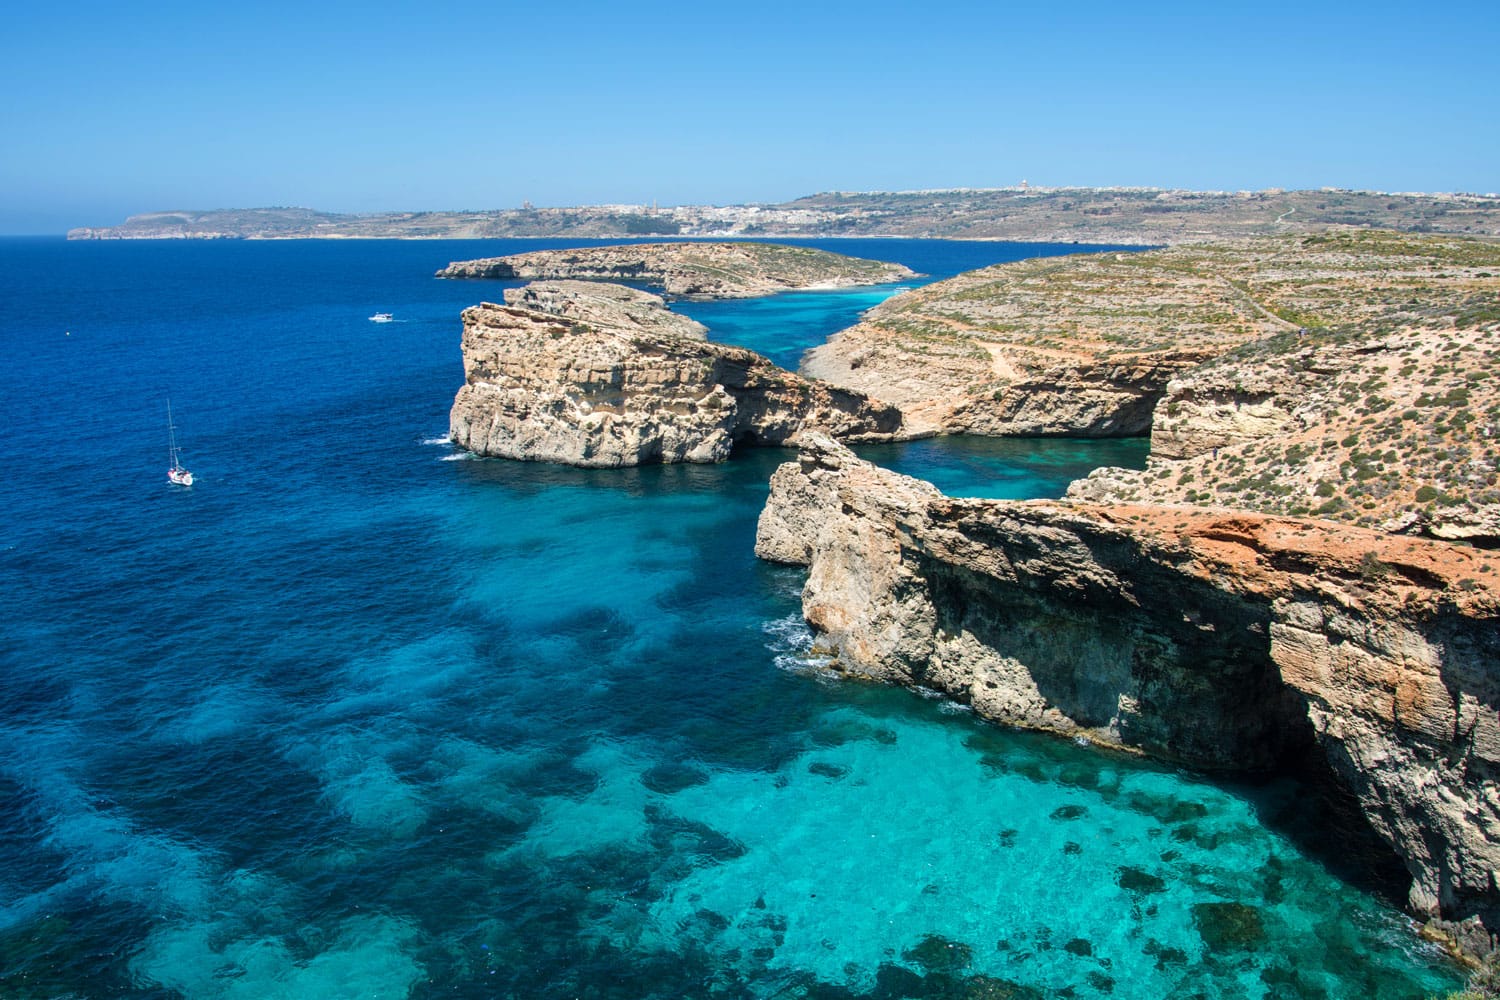 Comino island of the Maltese archipelago between the islands of Malta and Gozo in the Mediterranean Sea